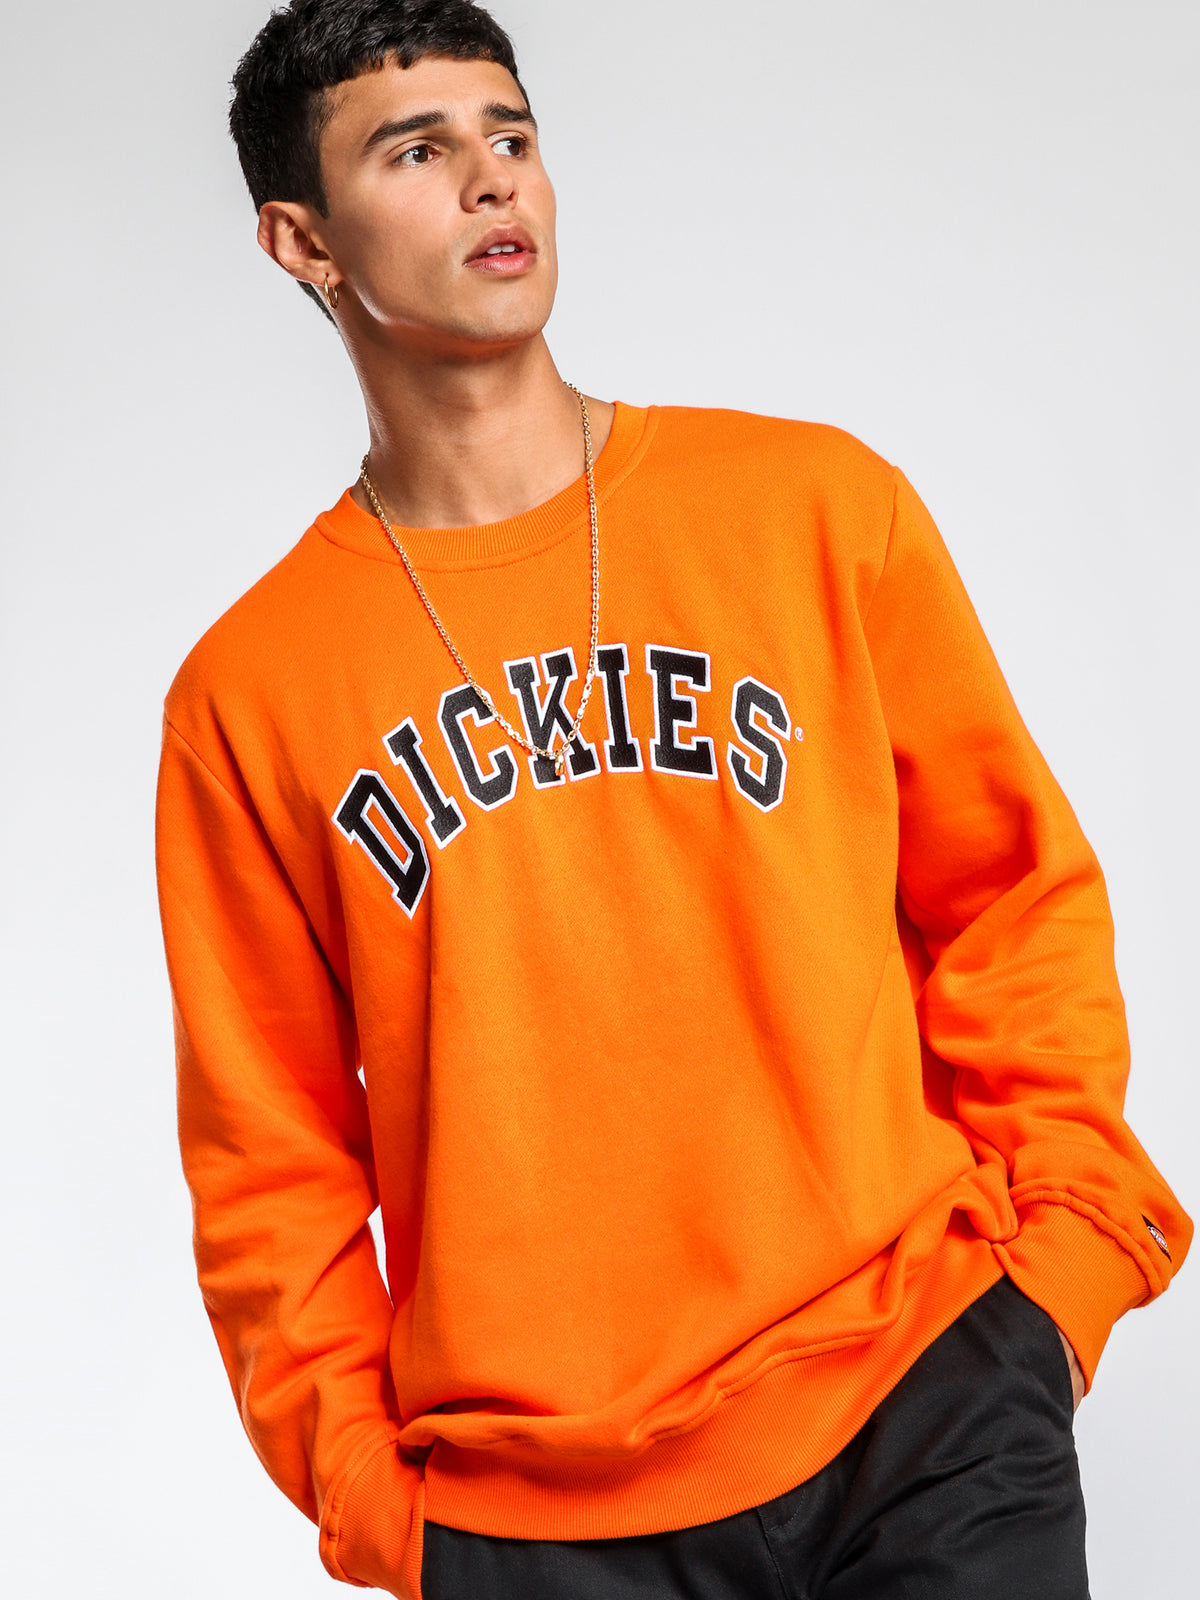 Princeton Crew Neck Sweater in Orange